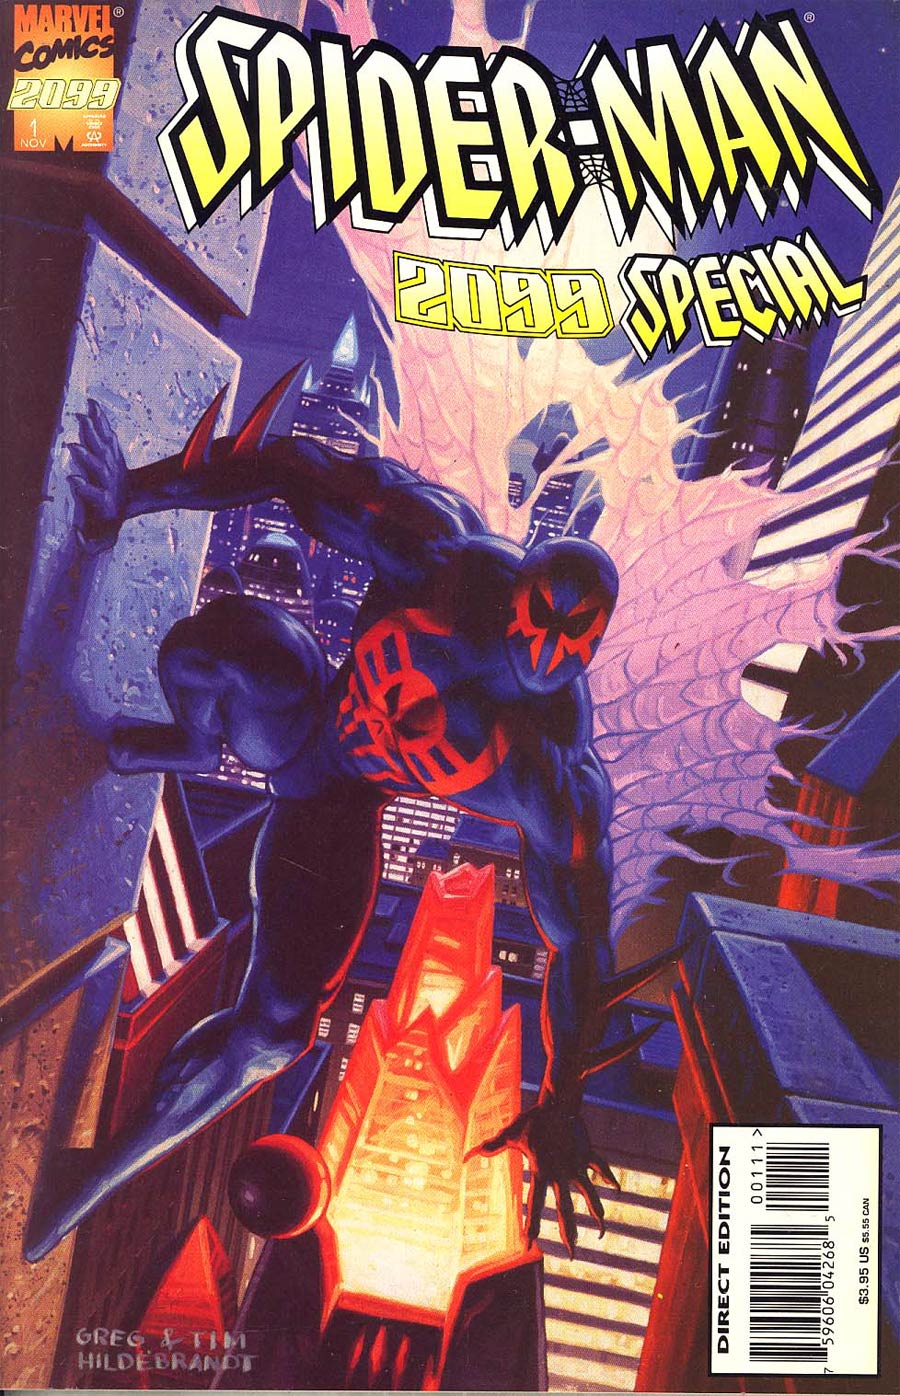 Spider-Man 2099 Special #1